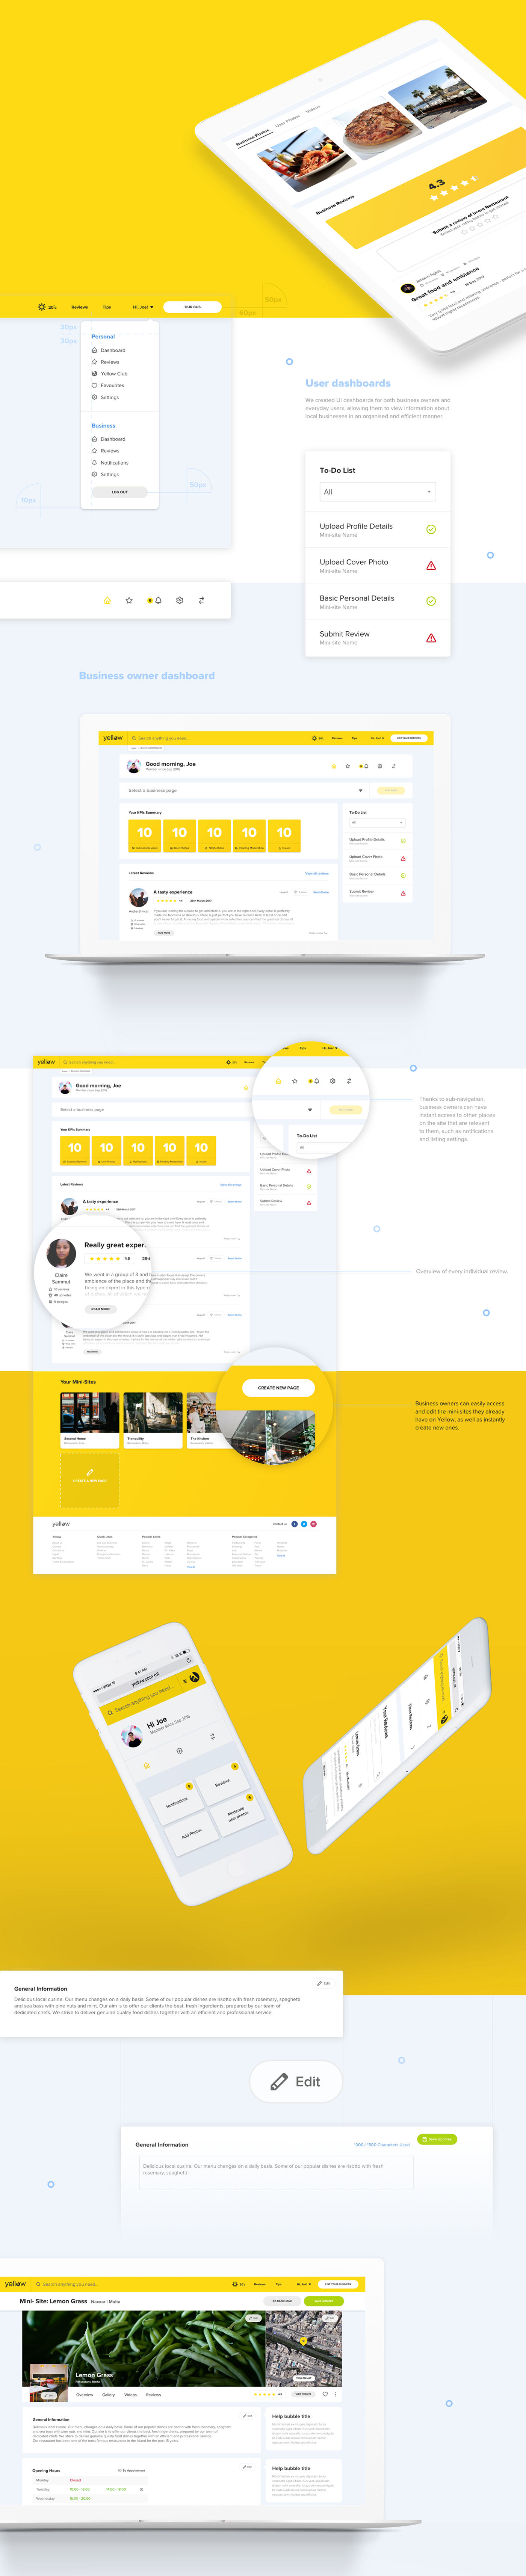 Web Design  wireframes user personas Prototyping Interaction design  brnd wgn malta yellow search dashboard